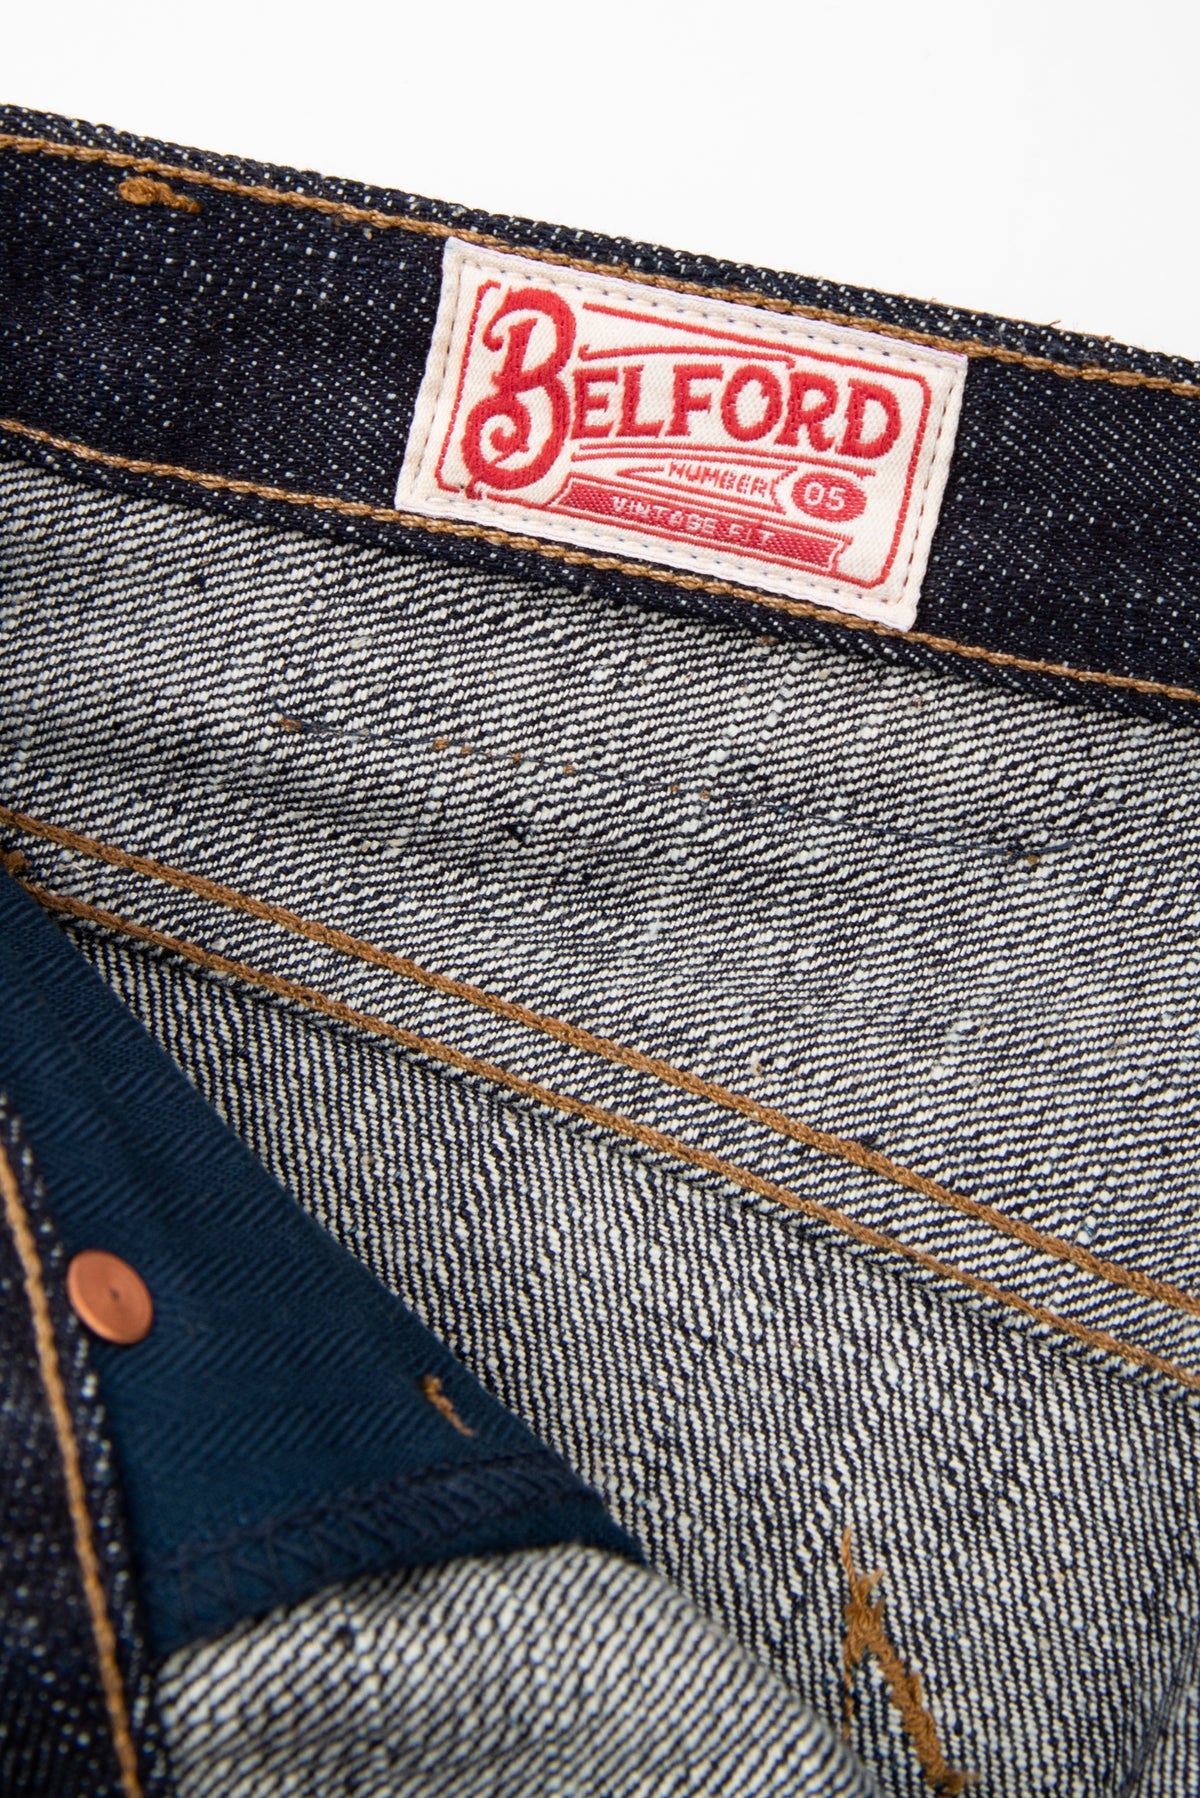 Freenote Cloth Belford - 17oz Indigo Slub